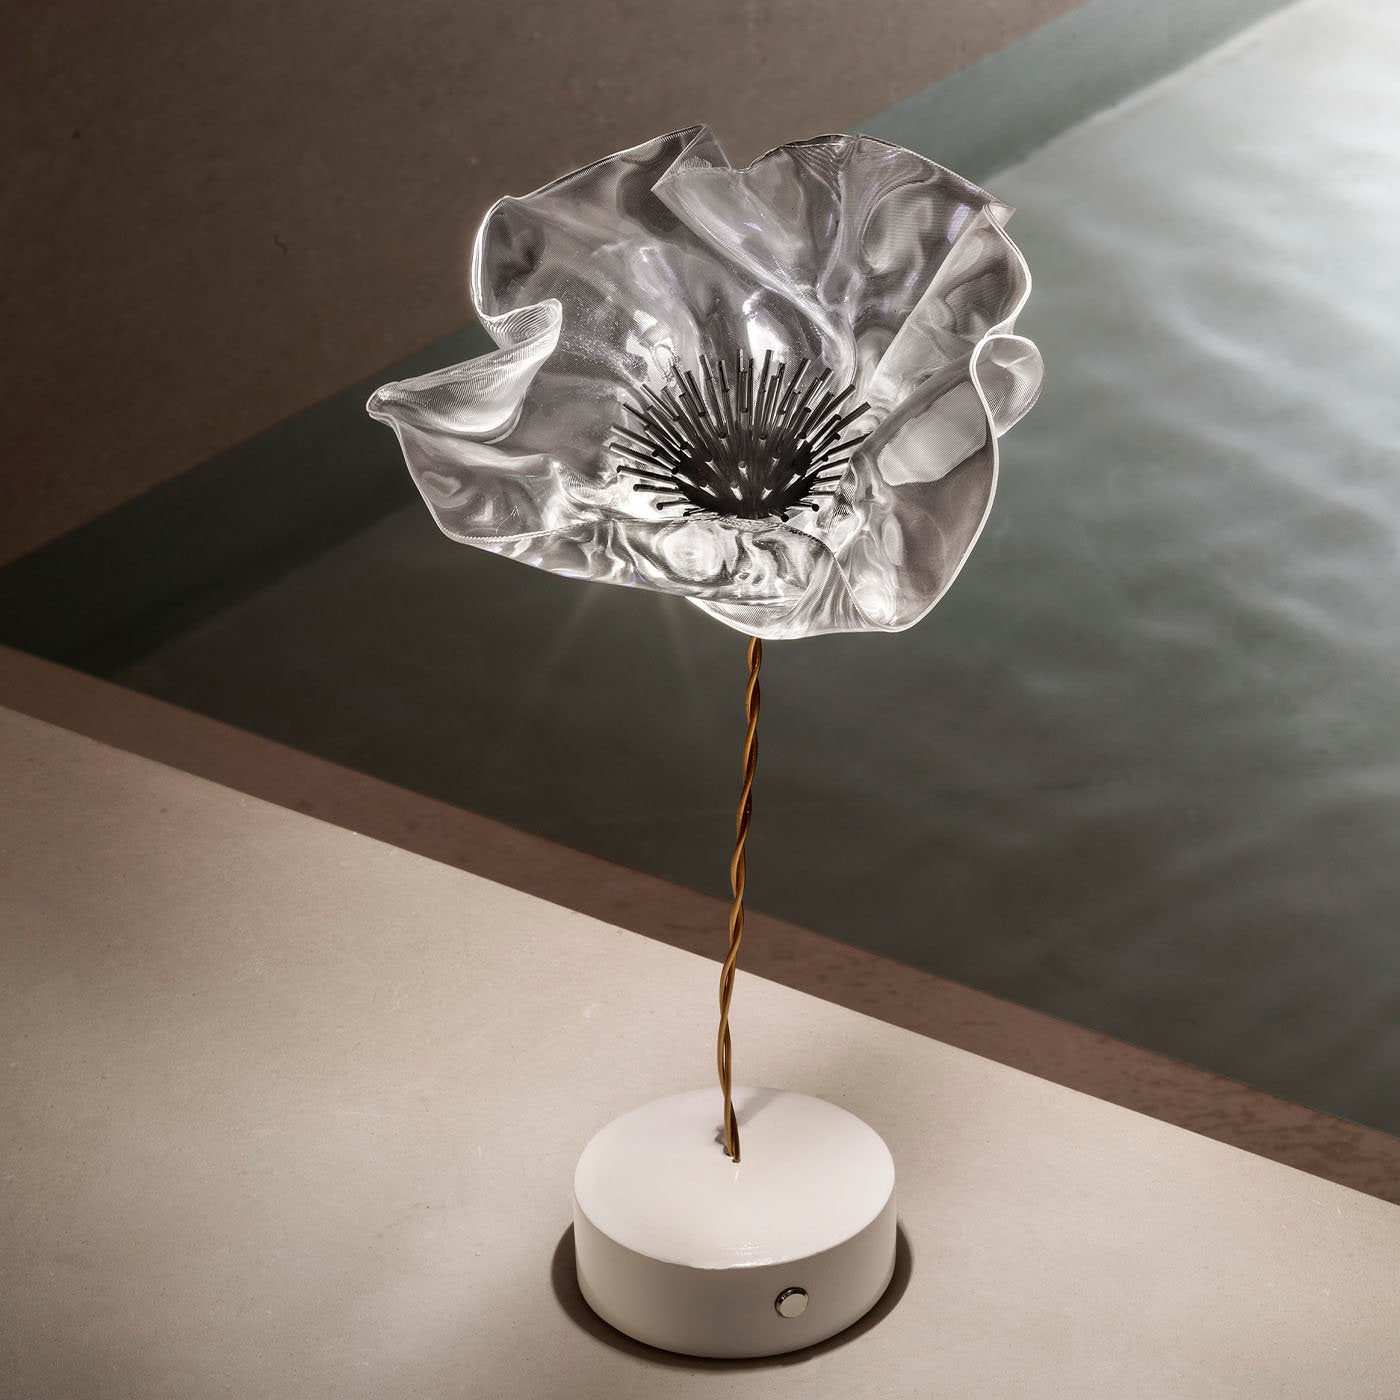 La Fleur Prisma Table Lamp by Marc Sadler - Alternative view 5